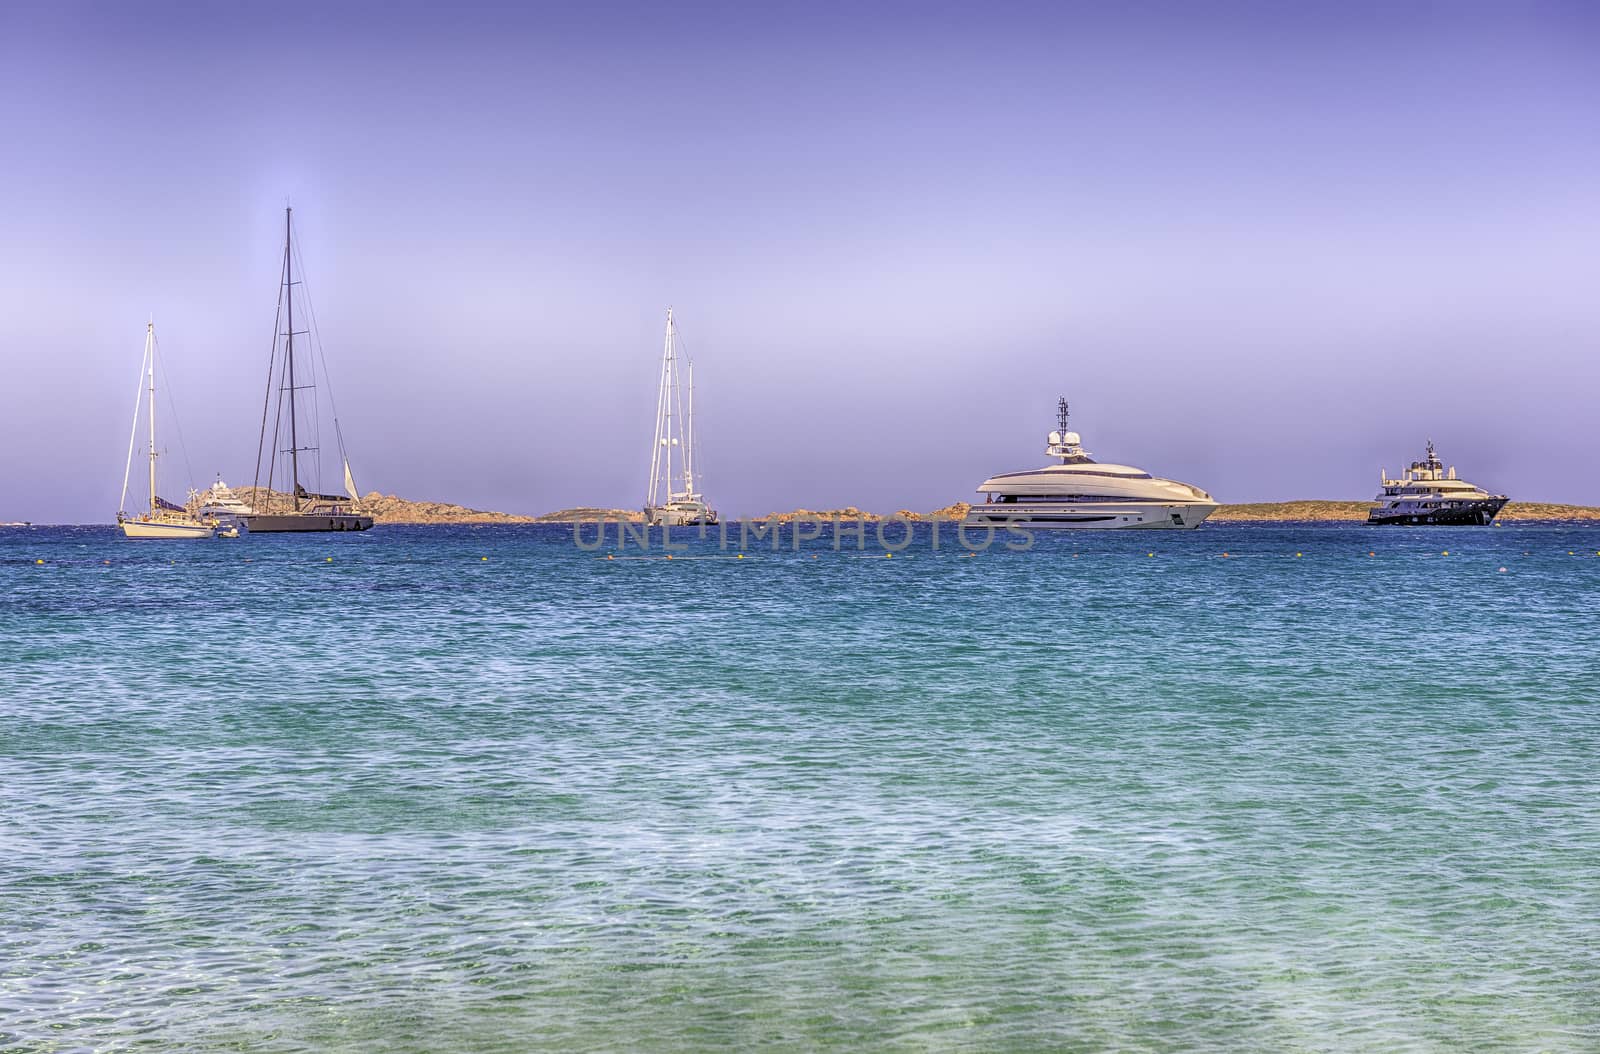 Luxury yachts in Costa Smeralda, Sardinia, Italy by marcorubino